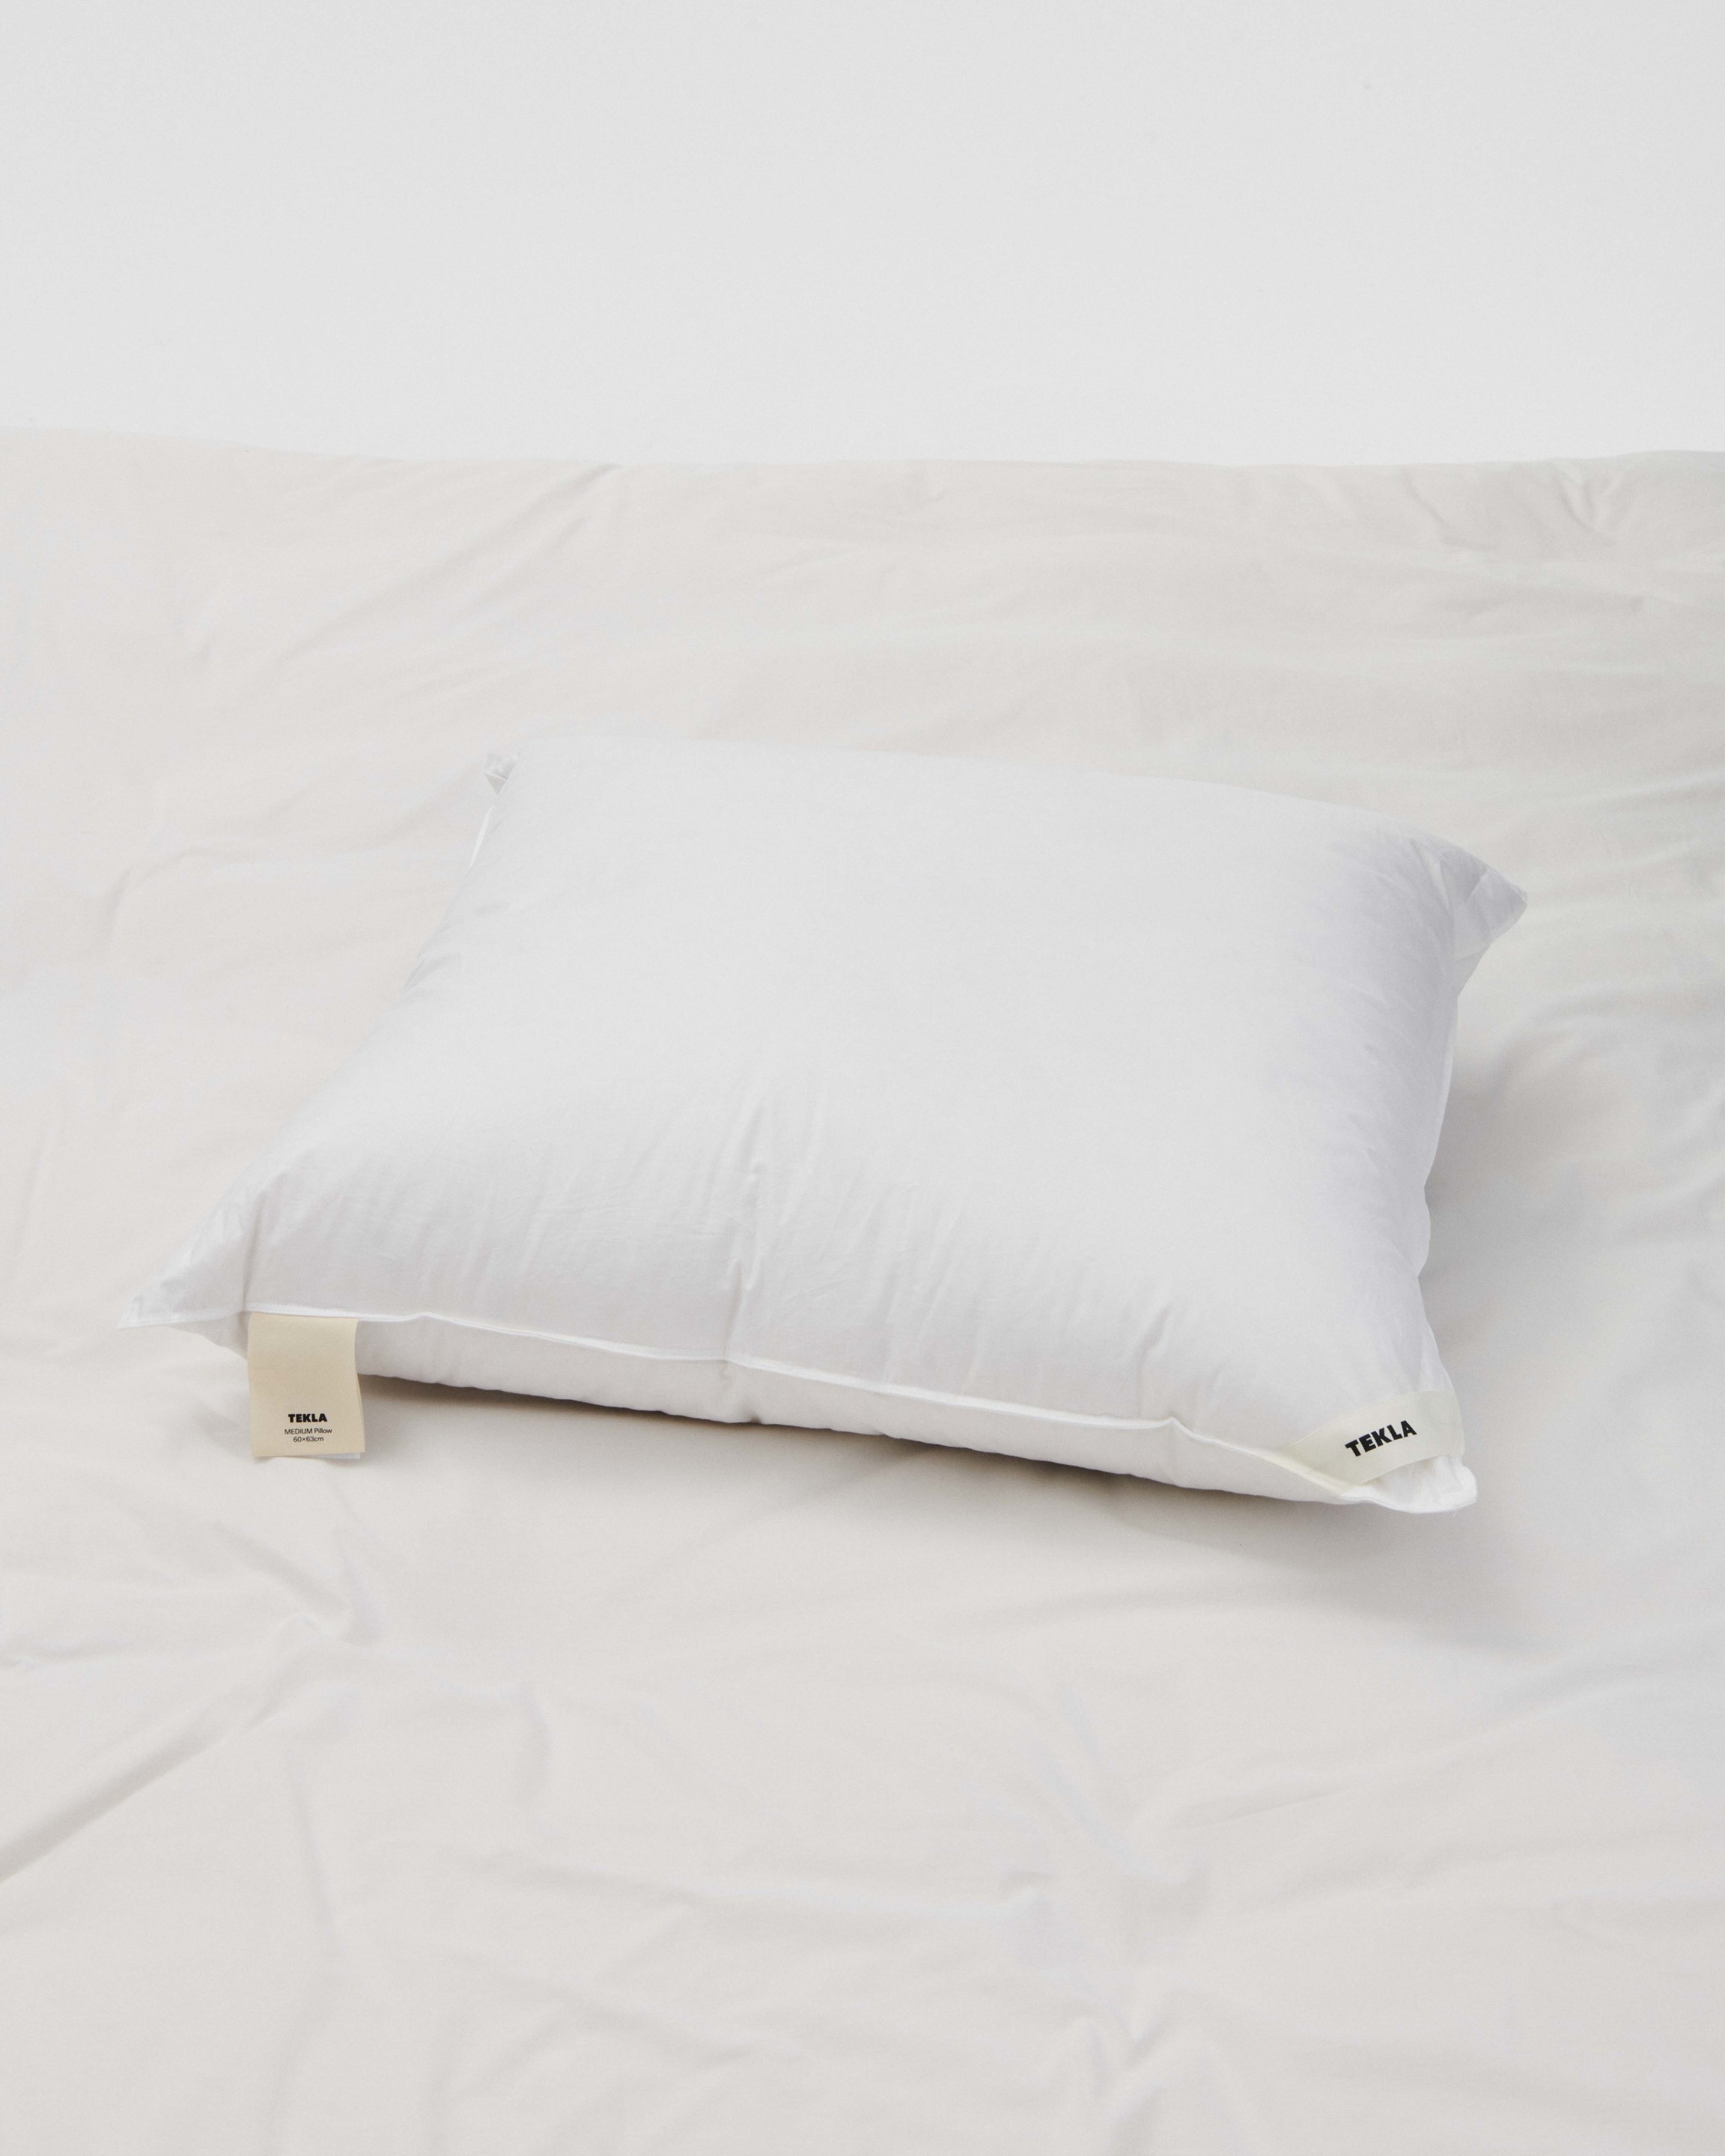 Medium pillow